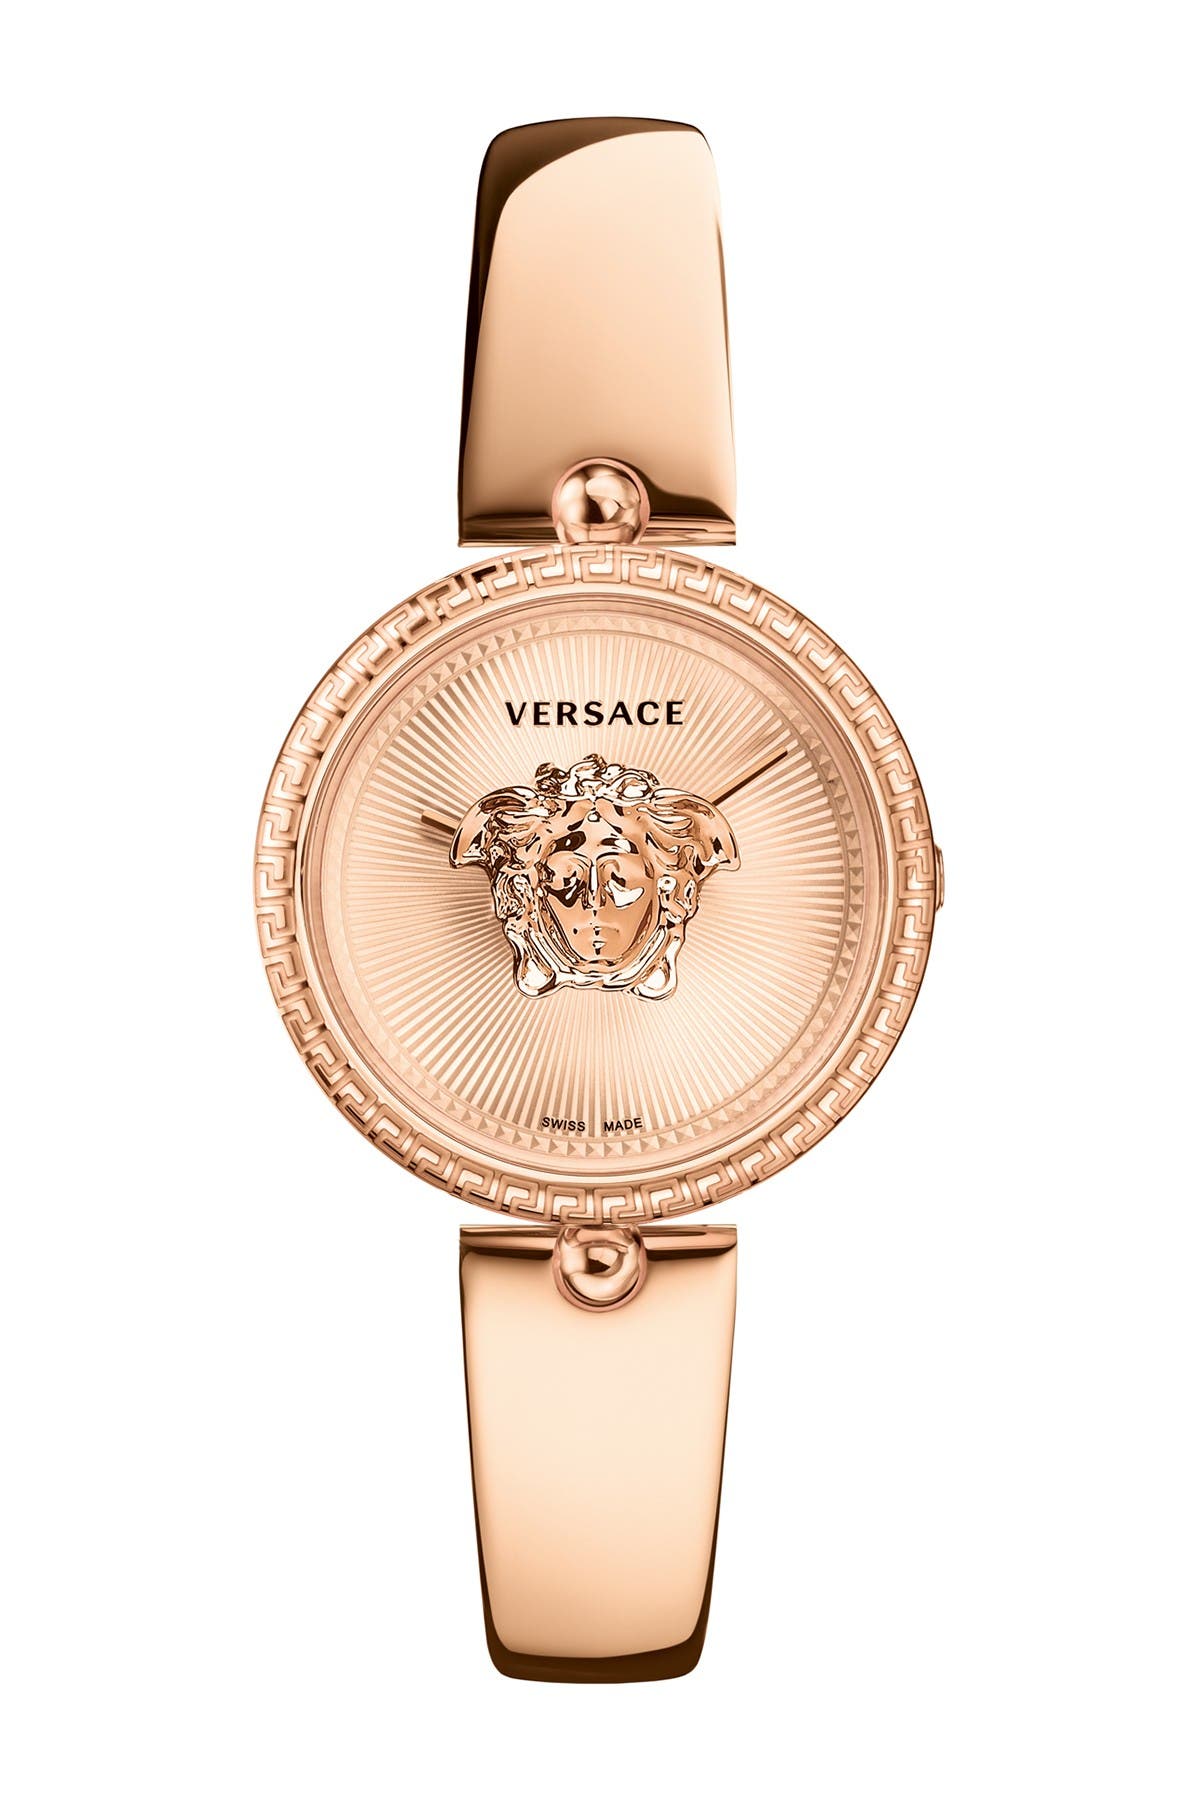 versace rose gold watch